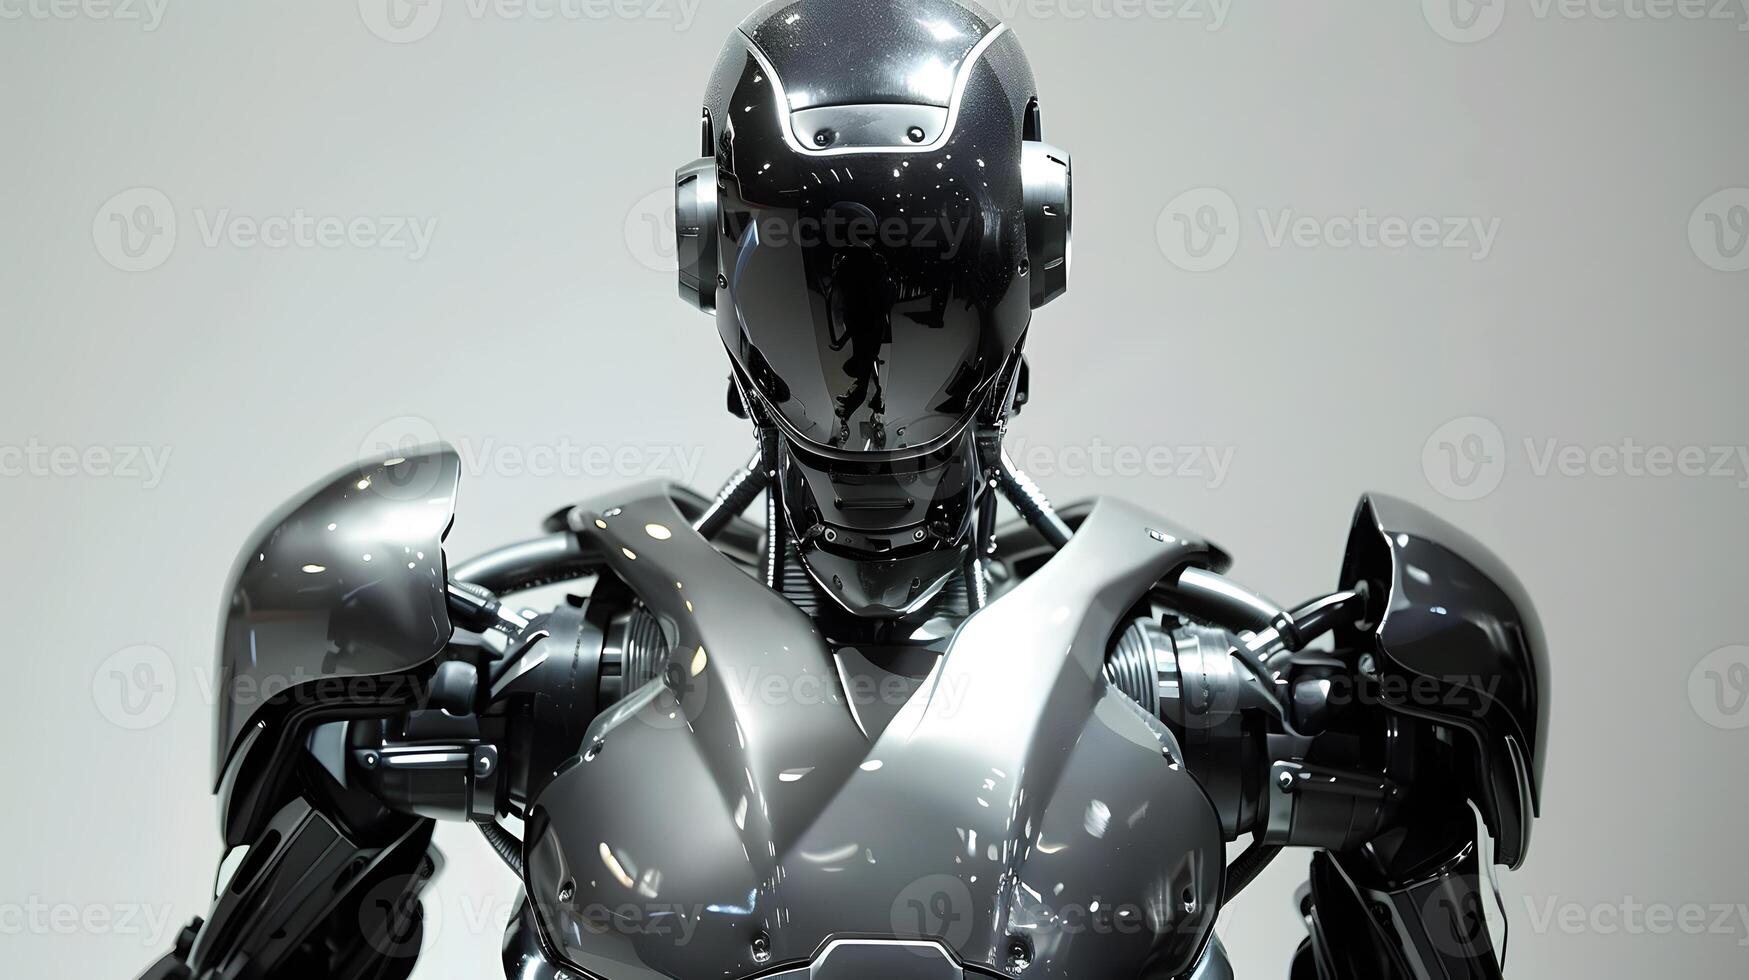 ai genererad de robot, de android, är redo till prestera arbete funktioner. ai genererad foto